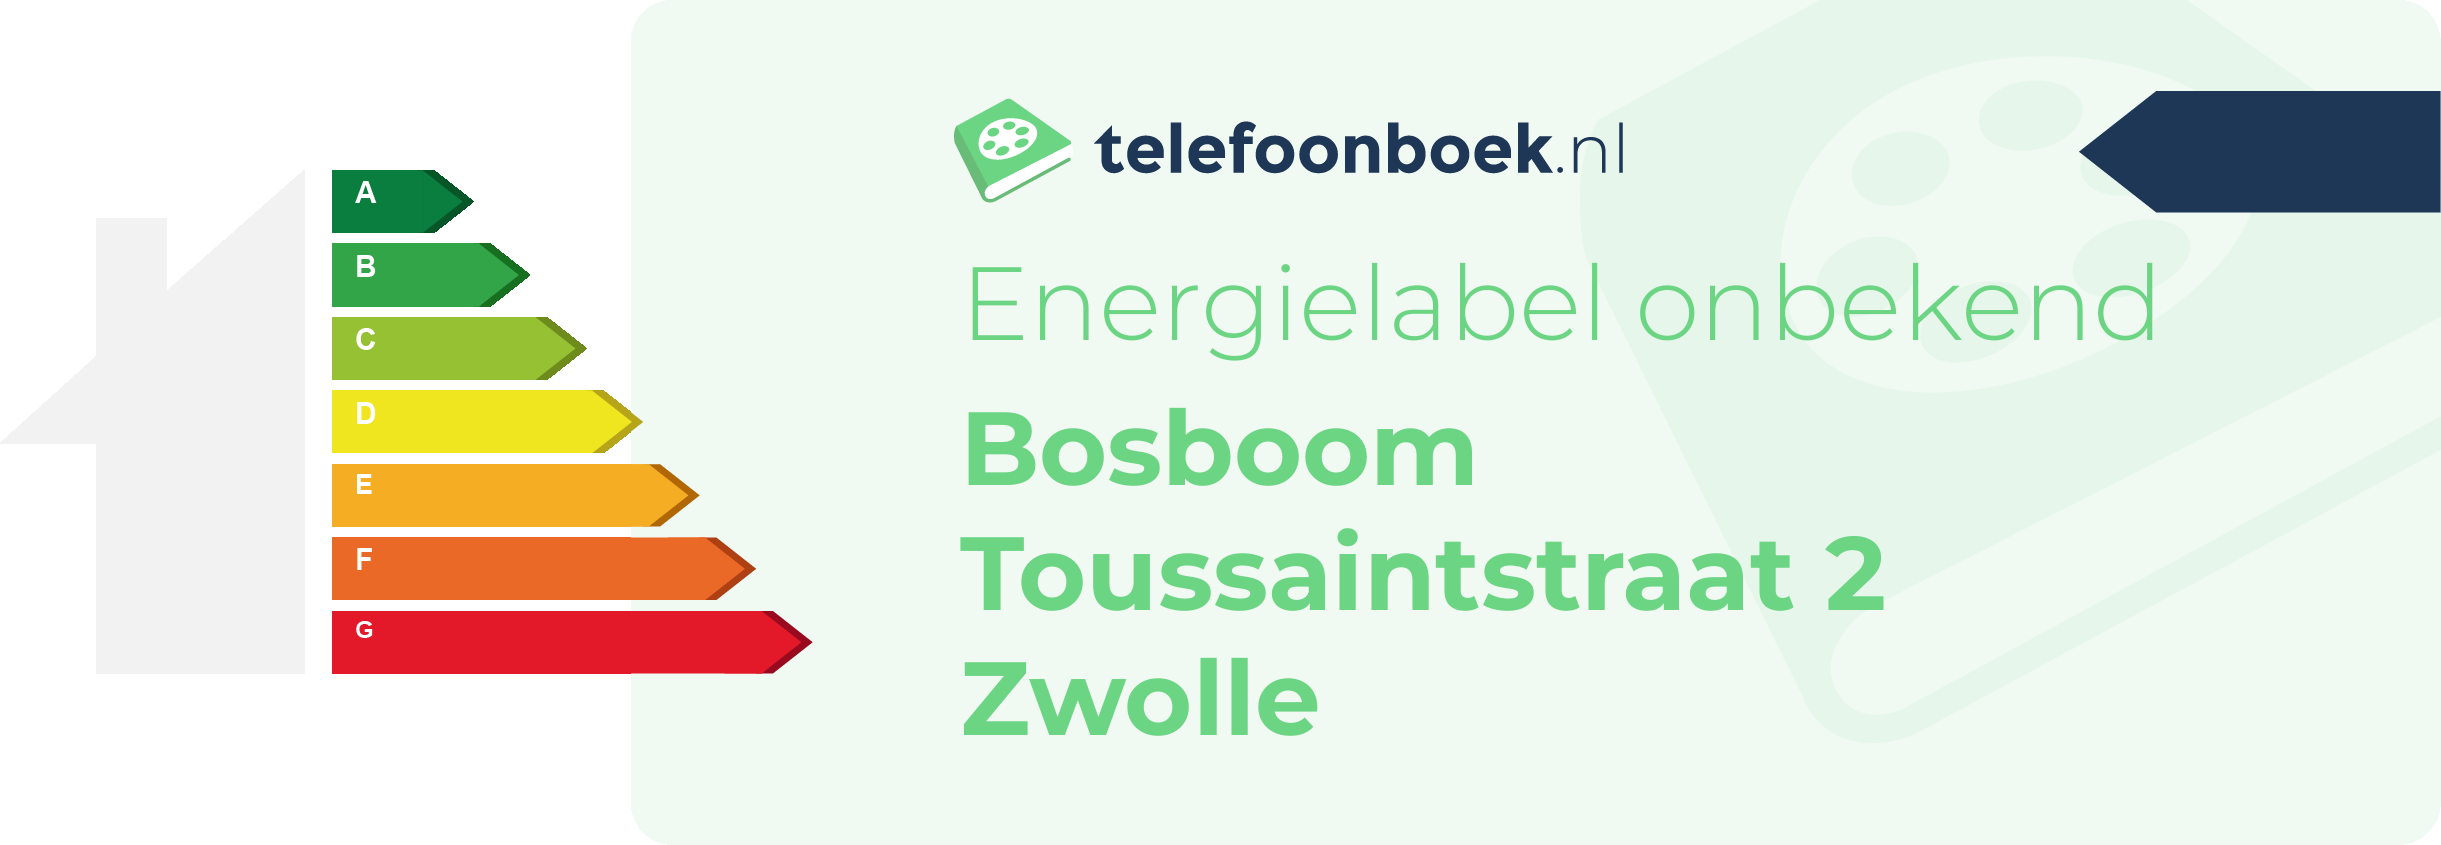 Energielabel Bosboom Toussaintstraat 2 Zwolle